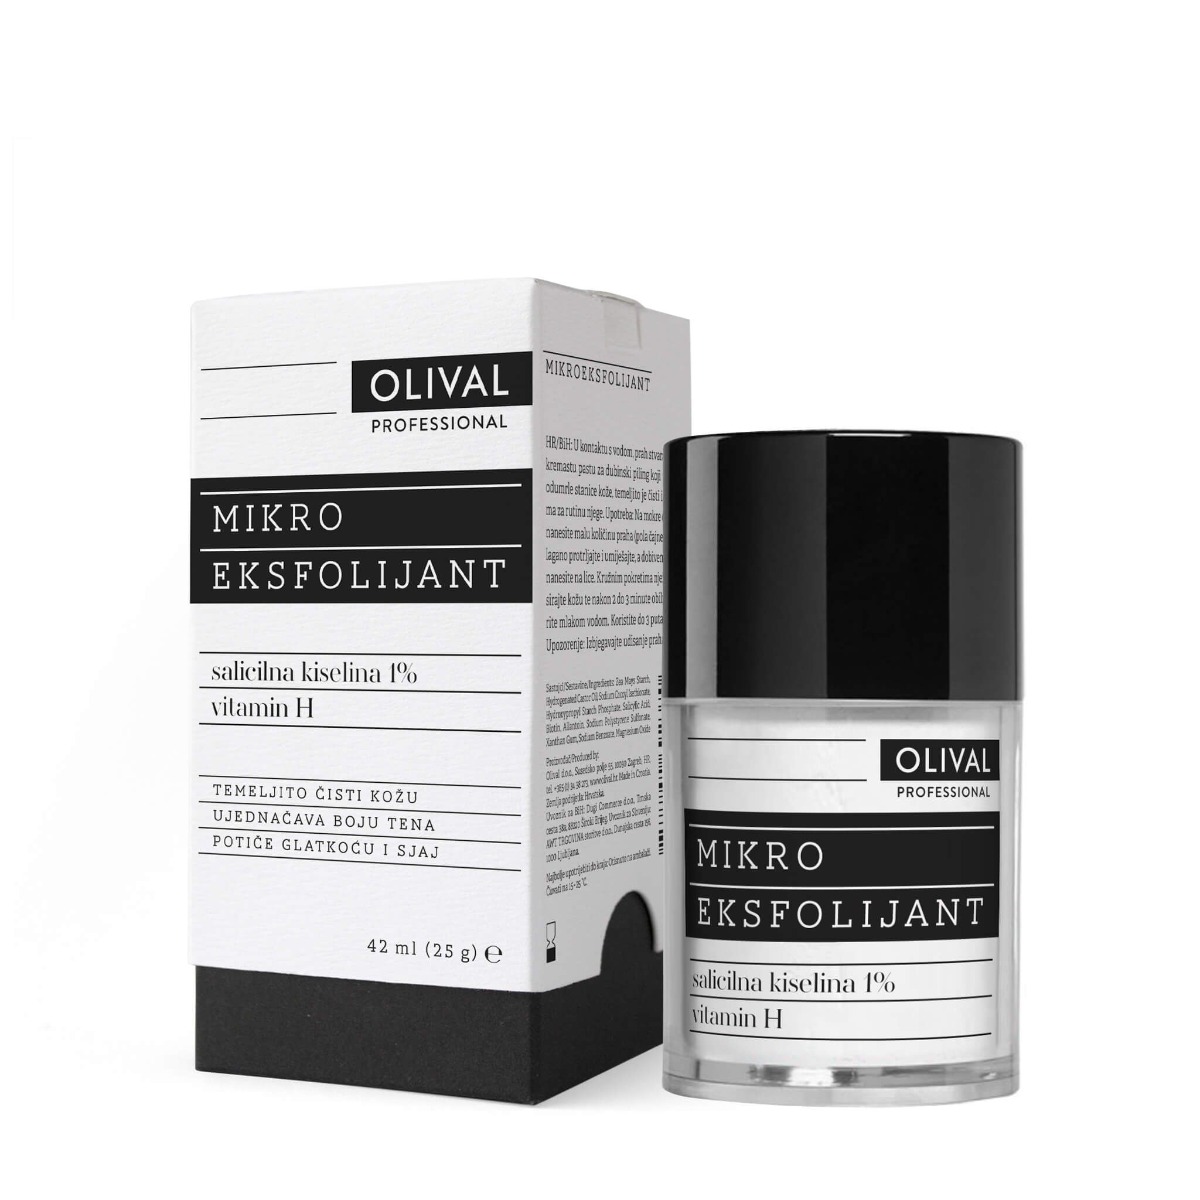 Olival Professional Microexfoliant 42 ml Olival